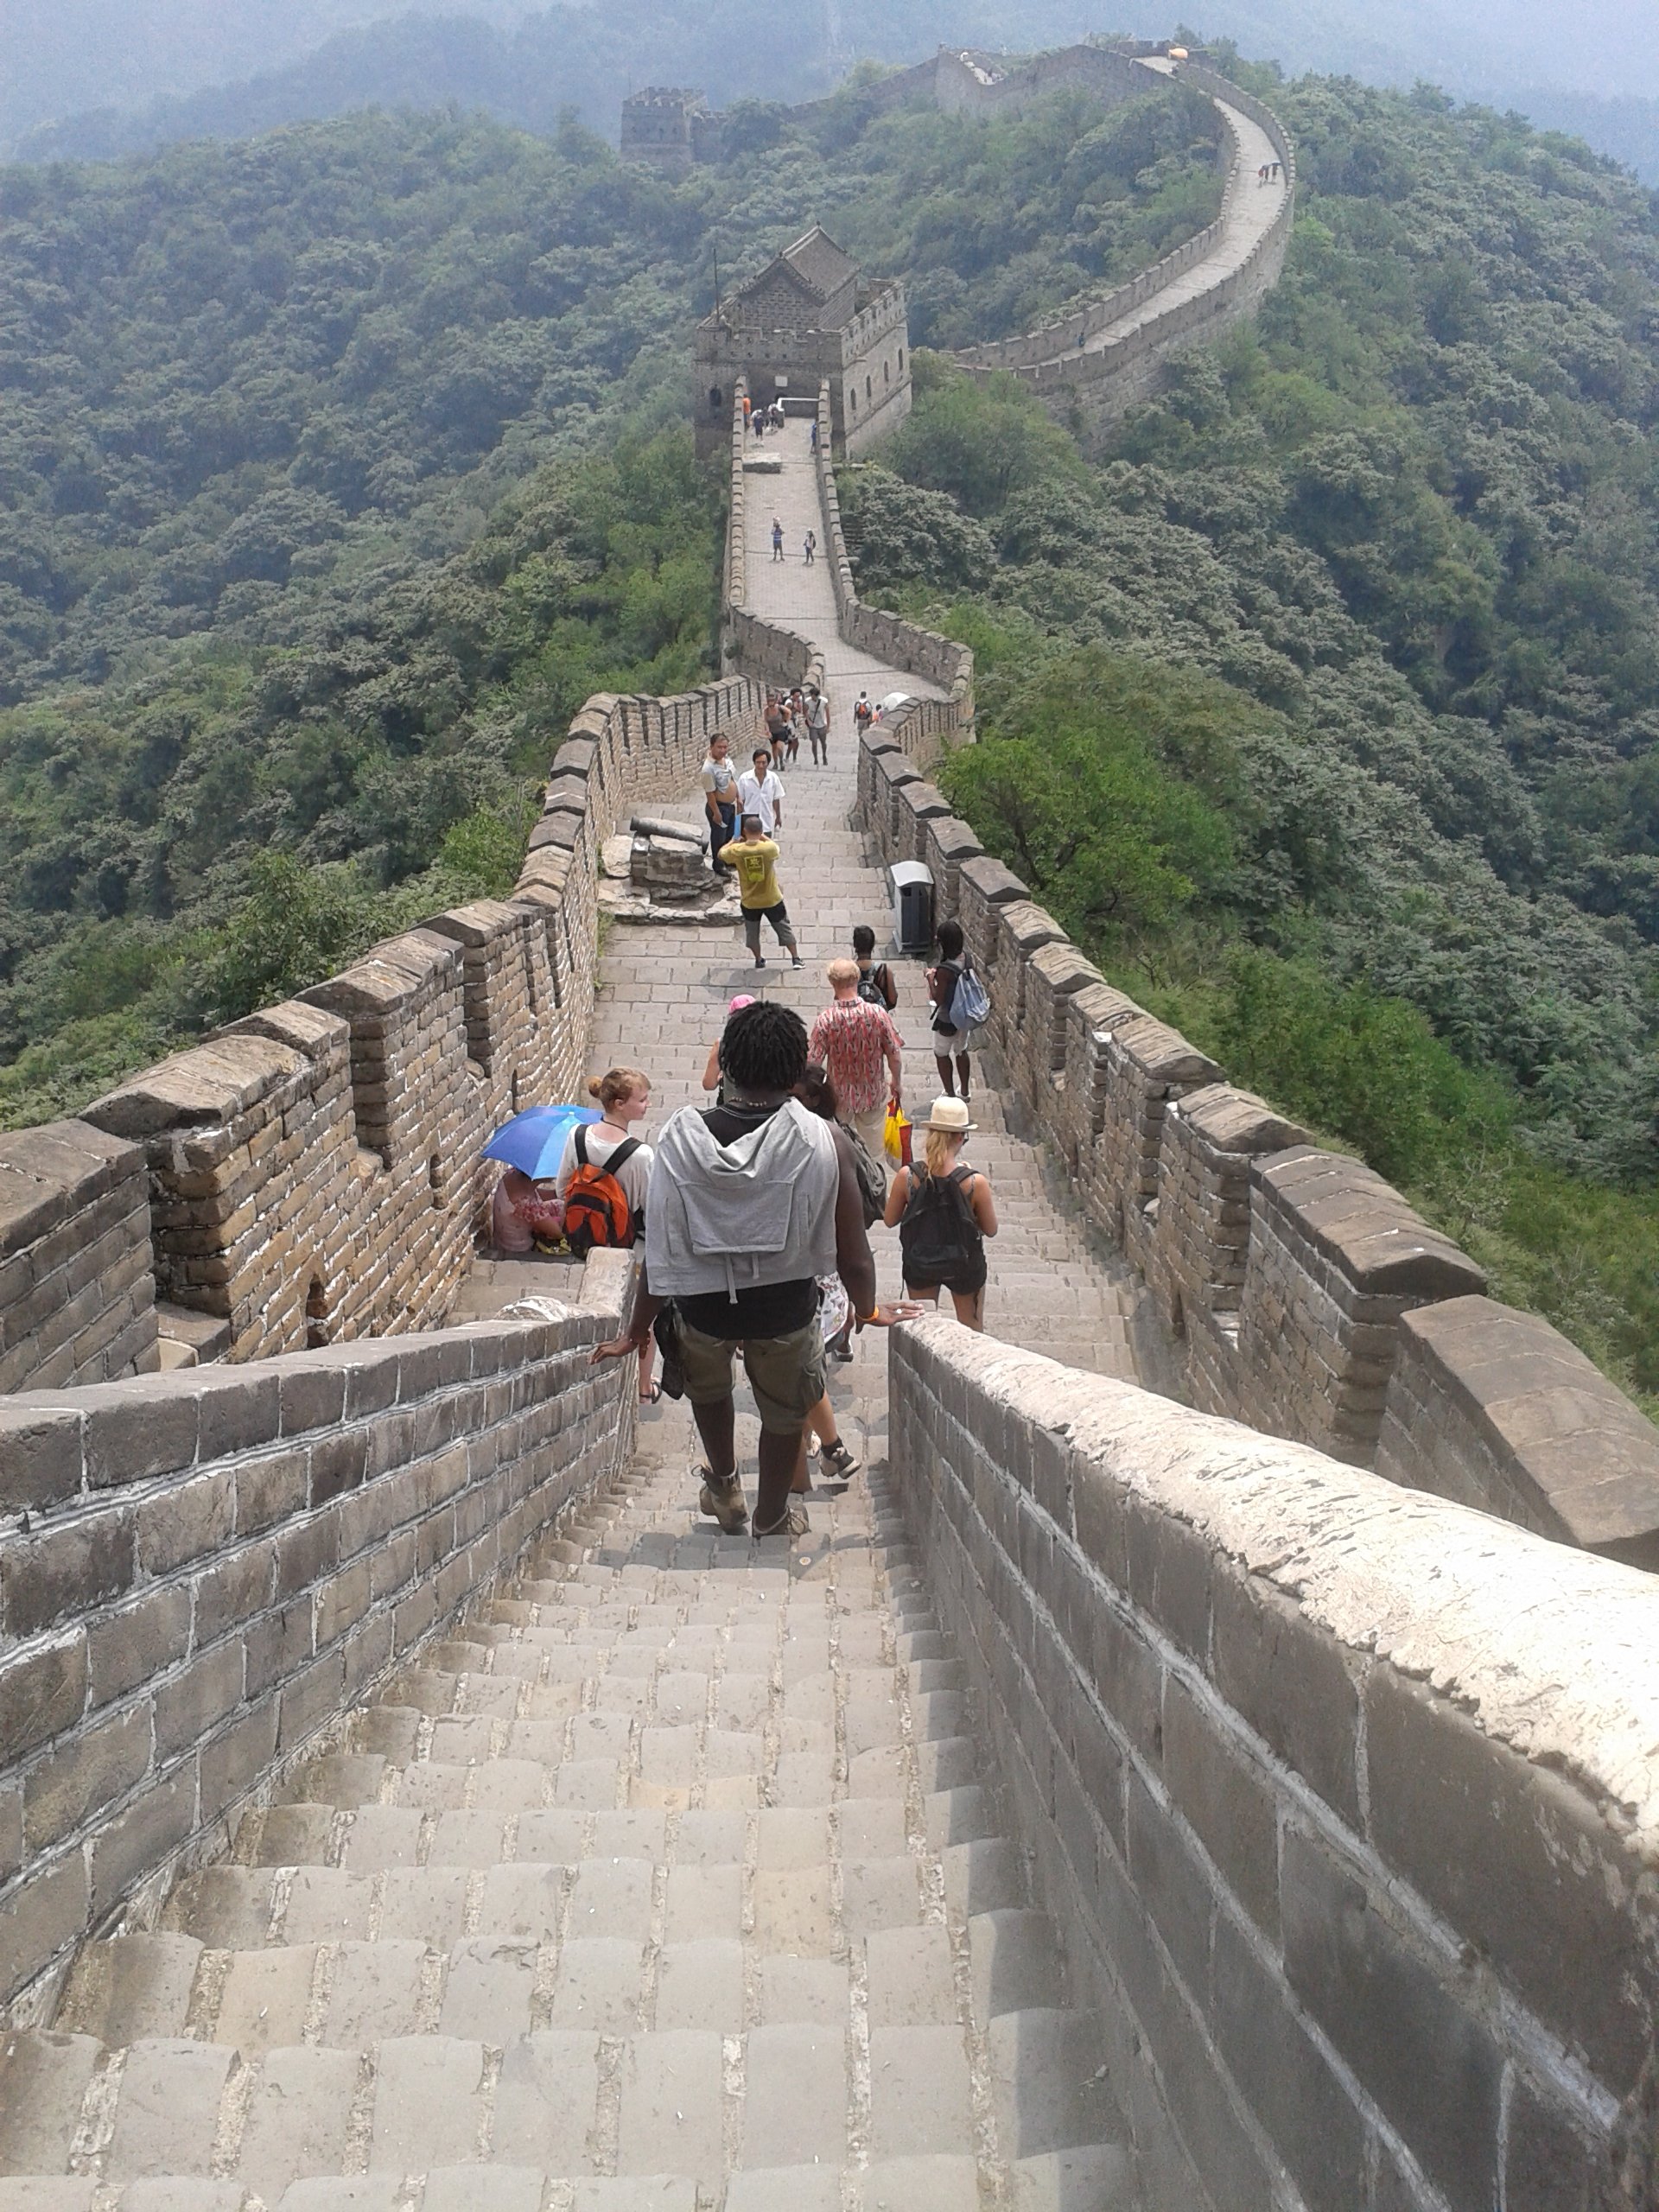 The Mutianyu Great Wall 